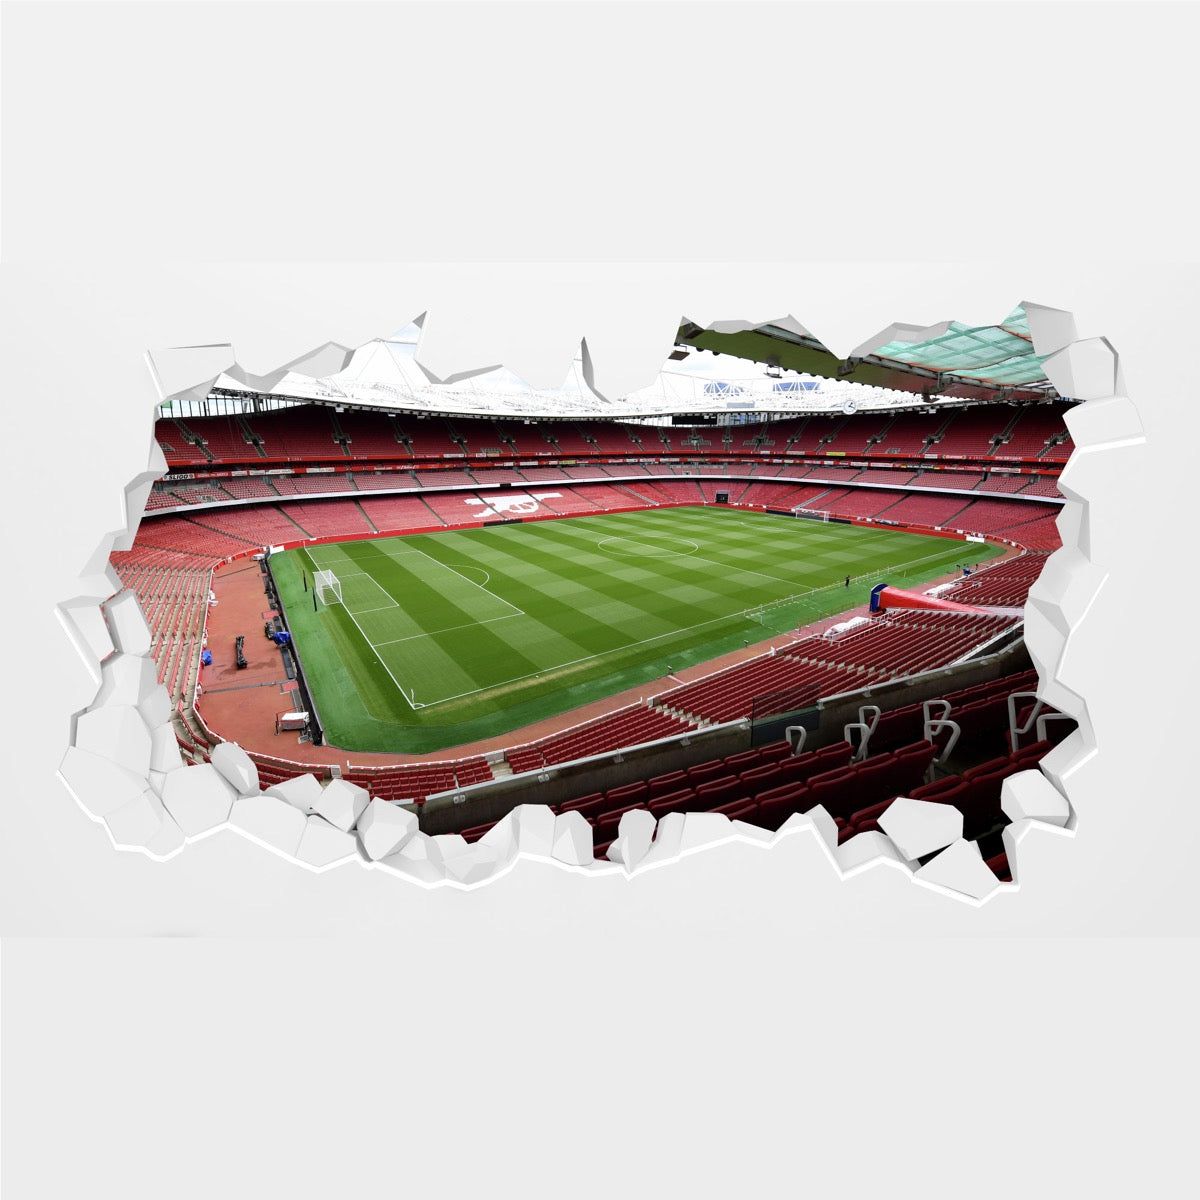 Arsenal FC - Stadium Corner View Broken Wall Sticker + Decal Set